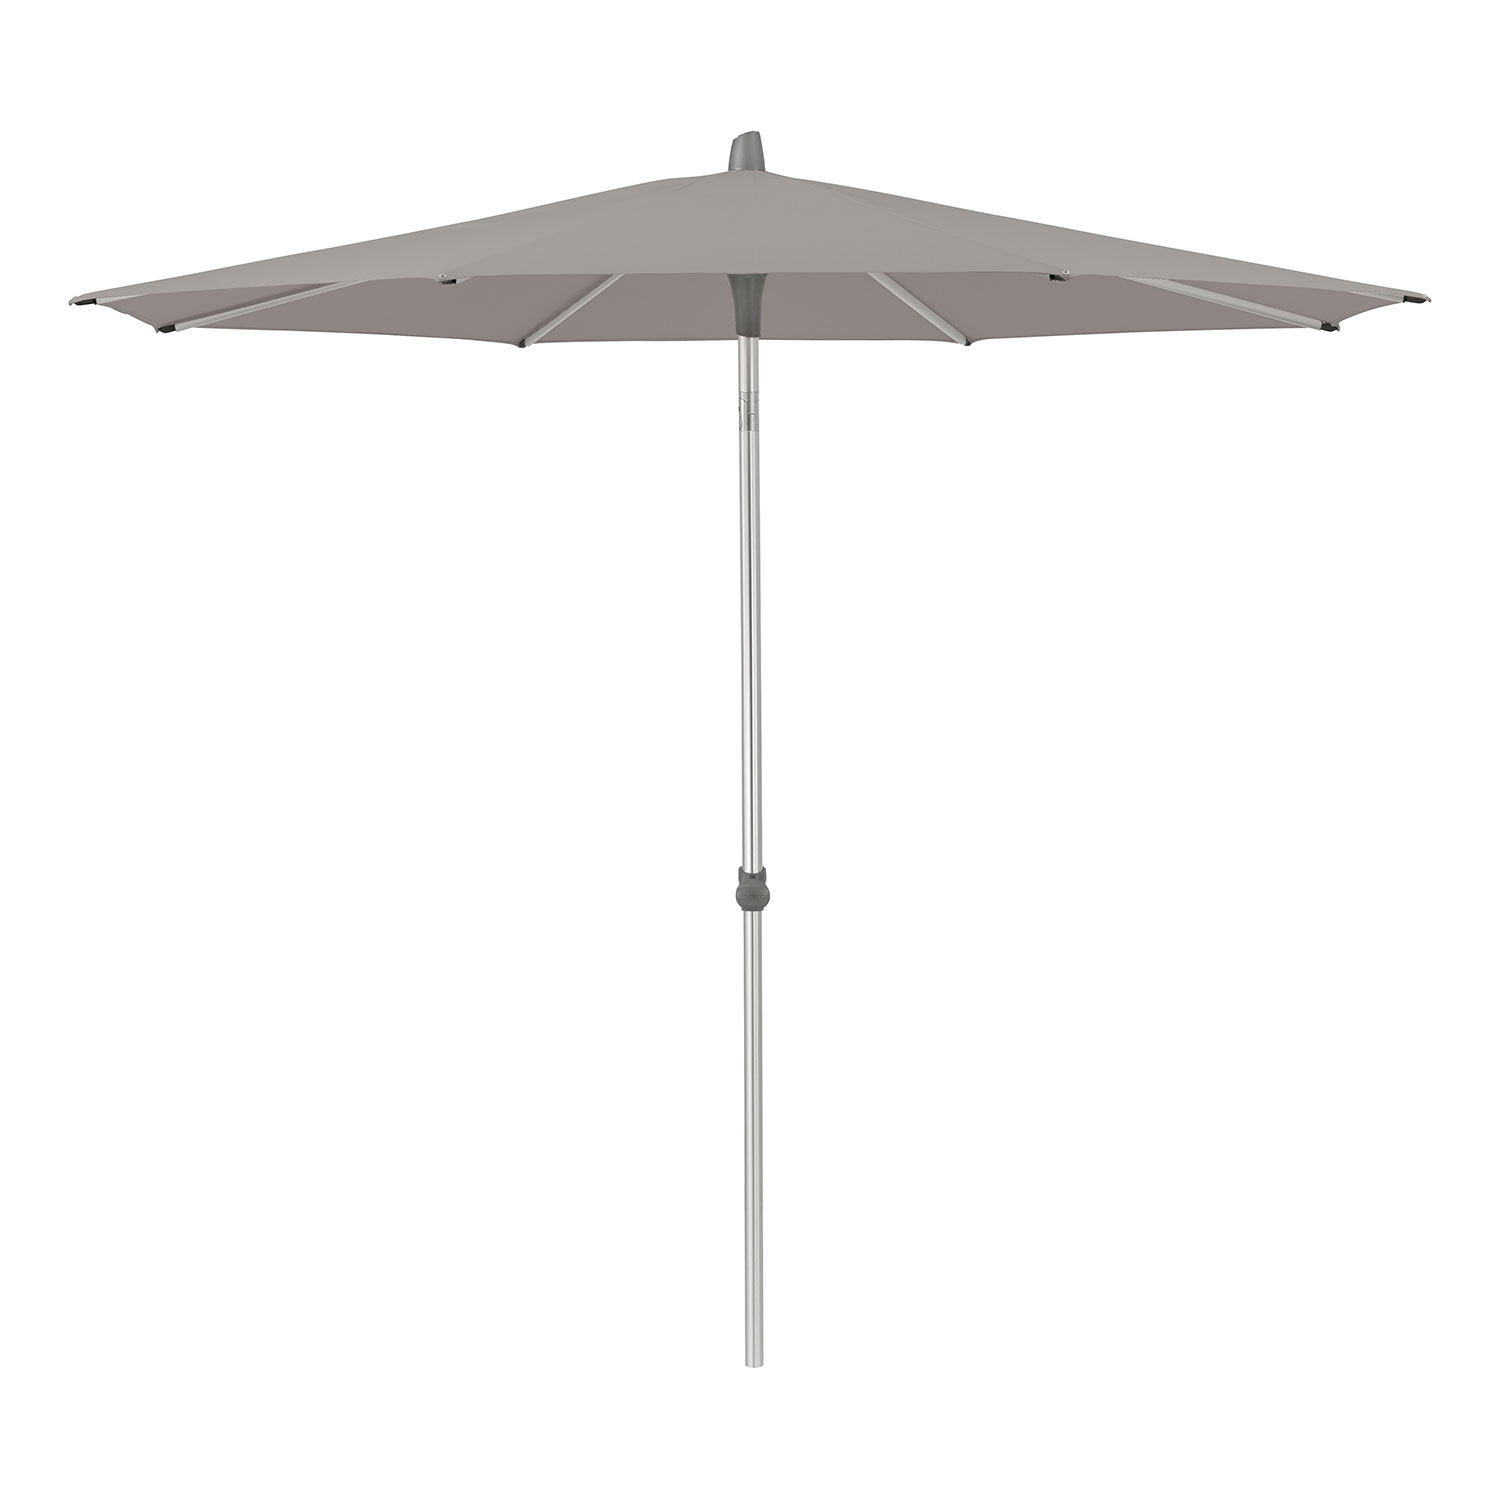 Glatz Alu-smart parasoll 200 cm kat.5 686 urban clay